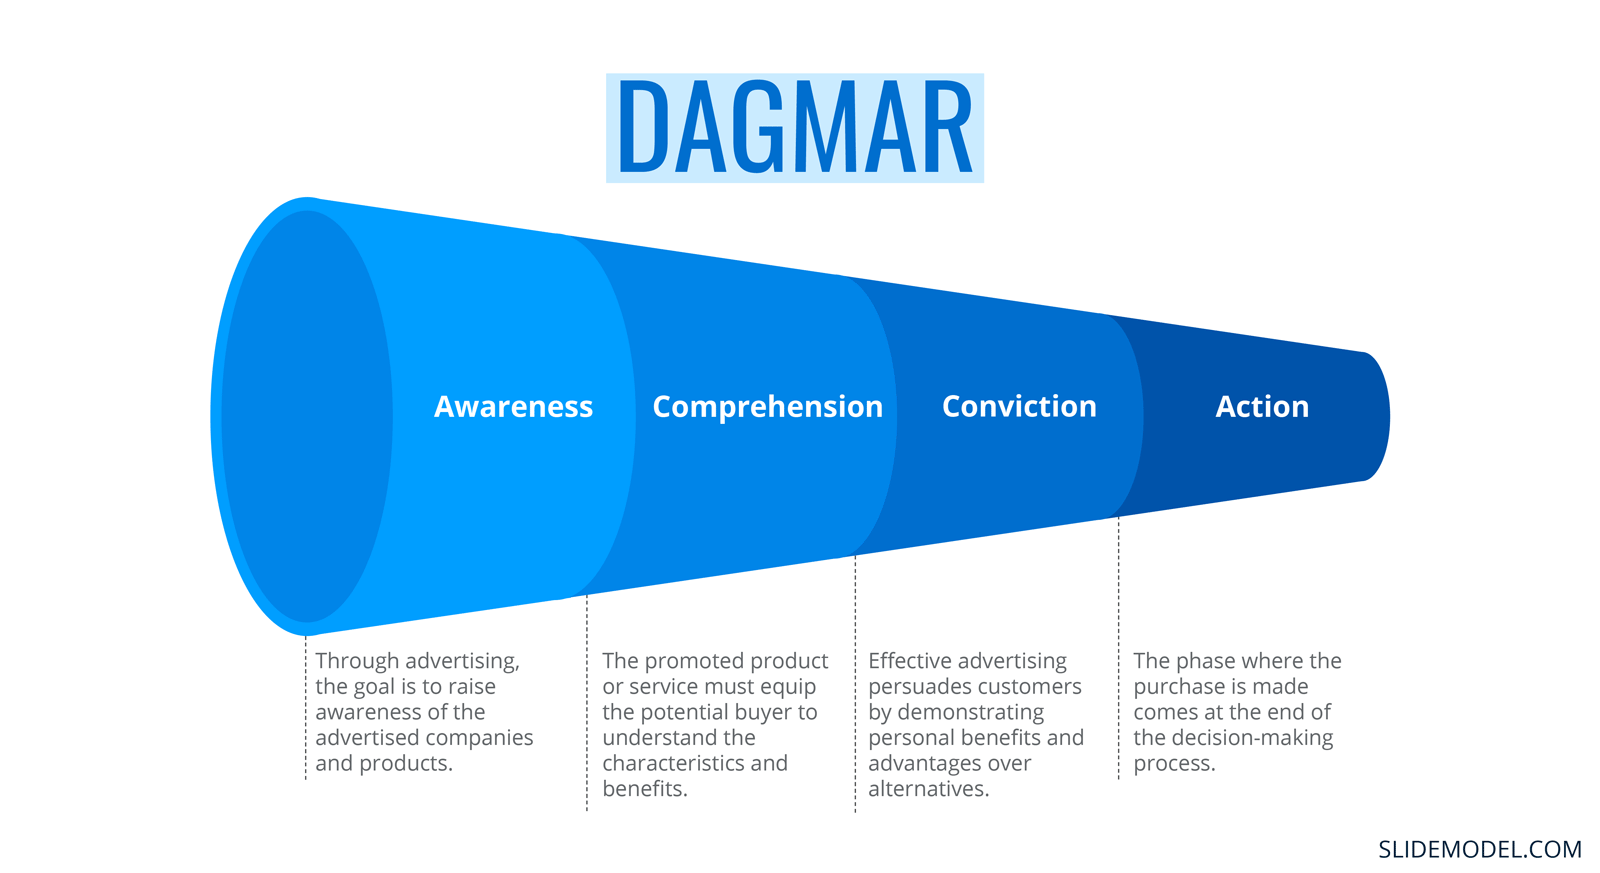 DAGMAR Formula: Awareness ? Comprehension ? Conviction ? Action